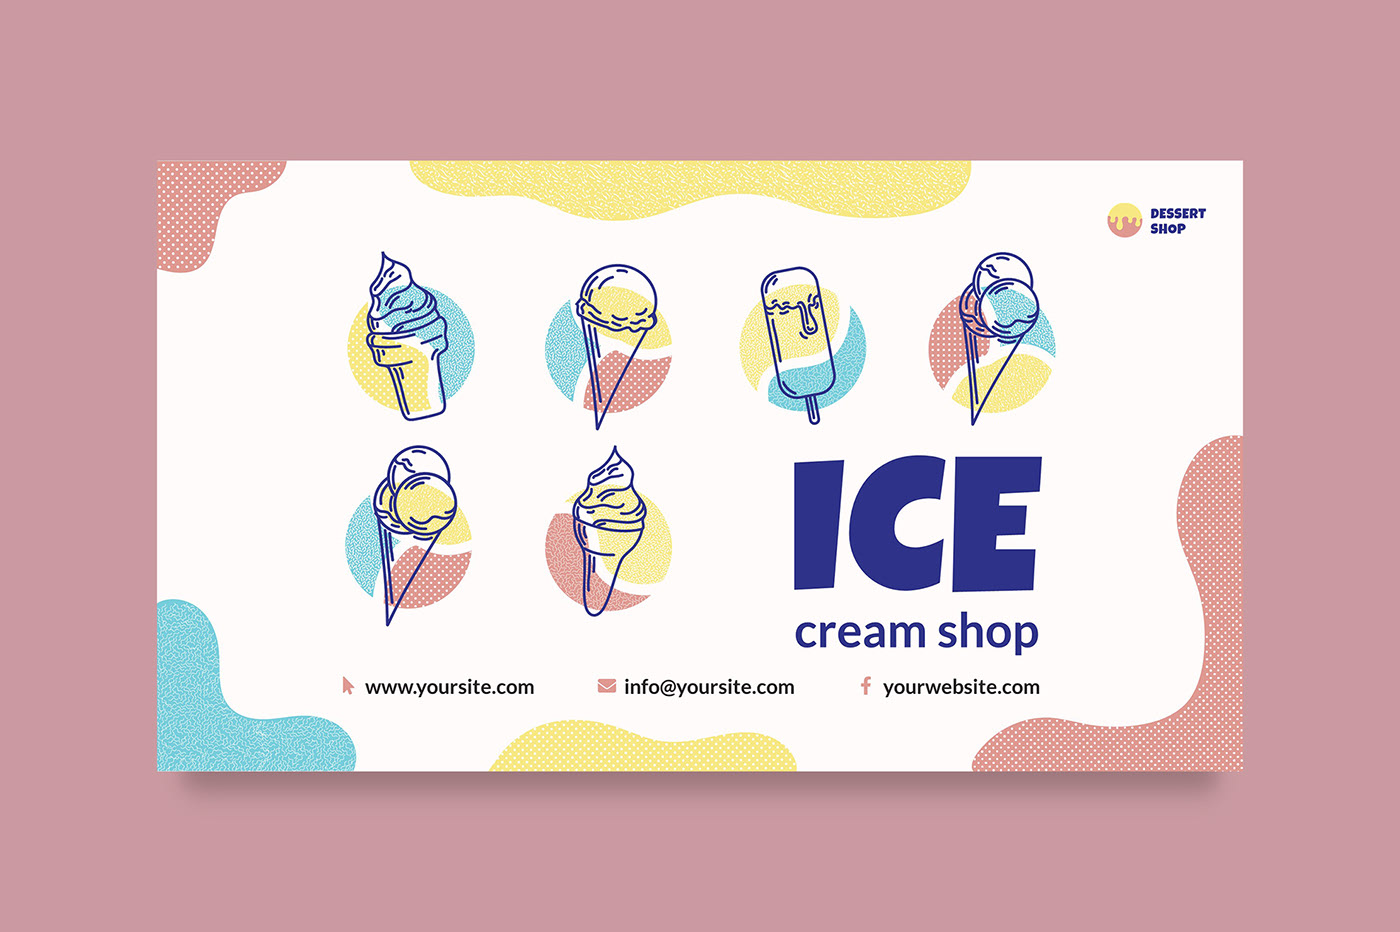 Ice Cream Shop PowerPoint Presentation Template on Behance